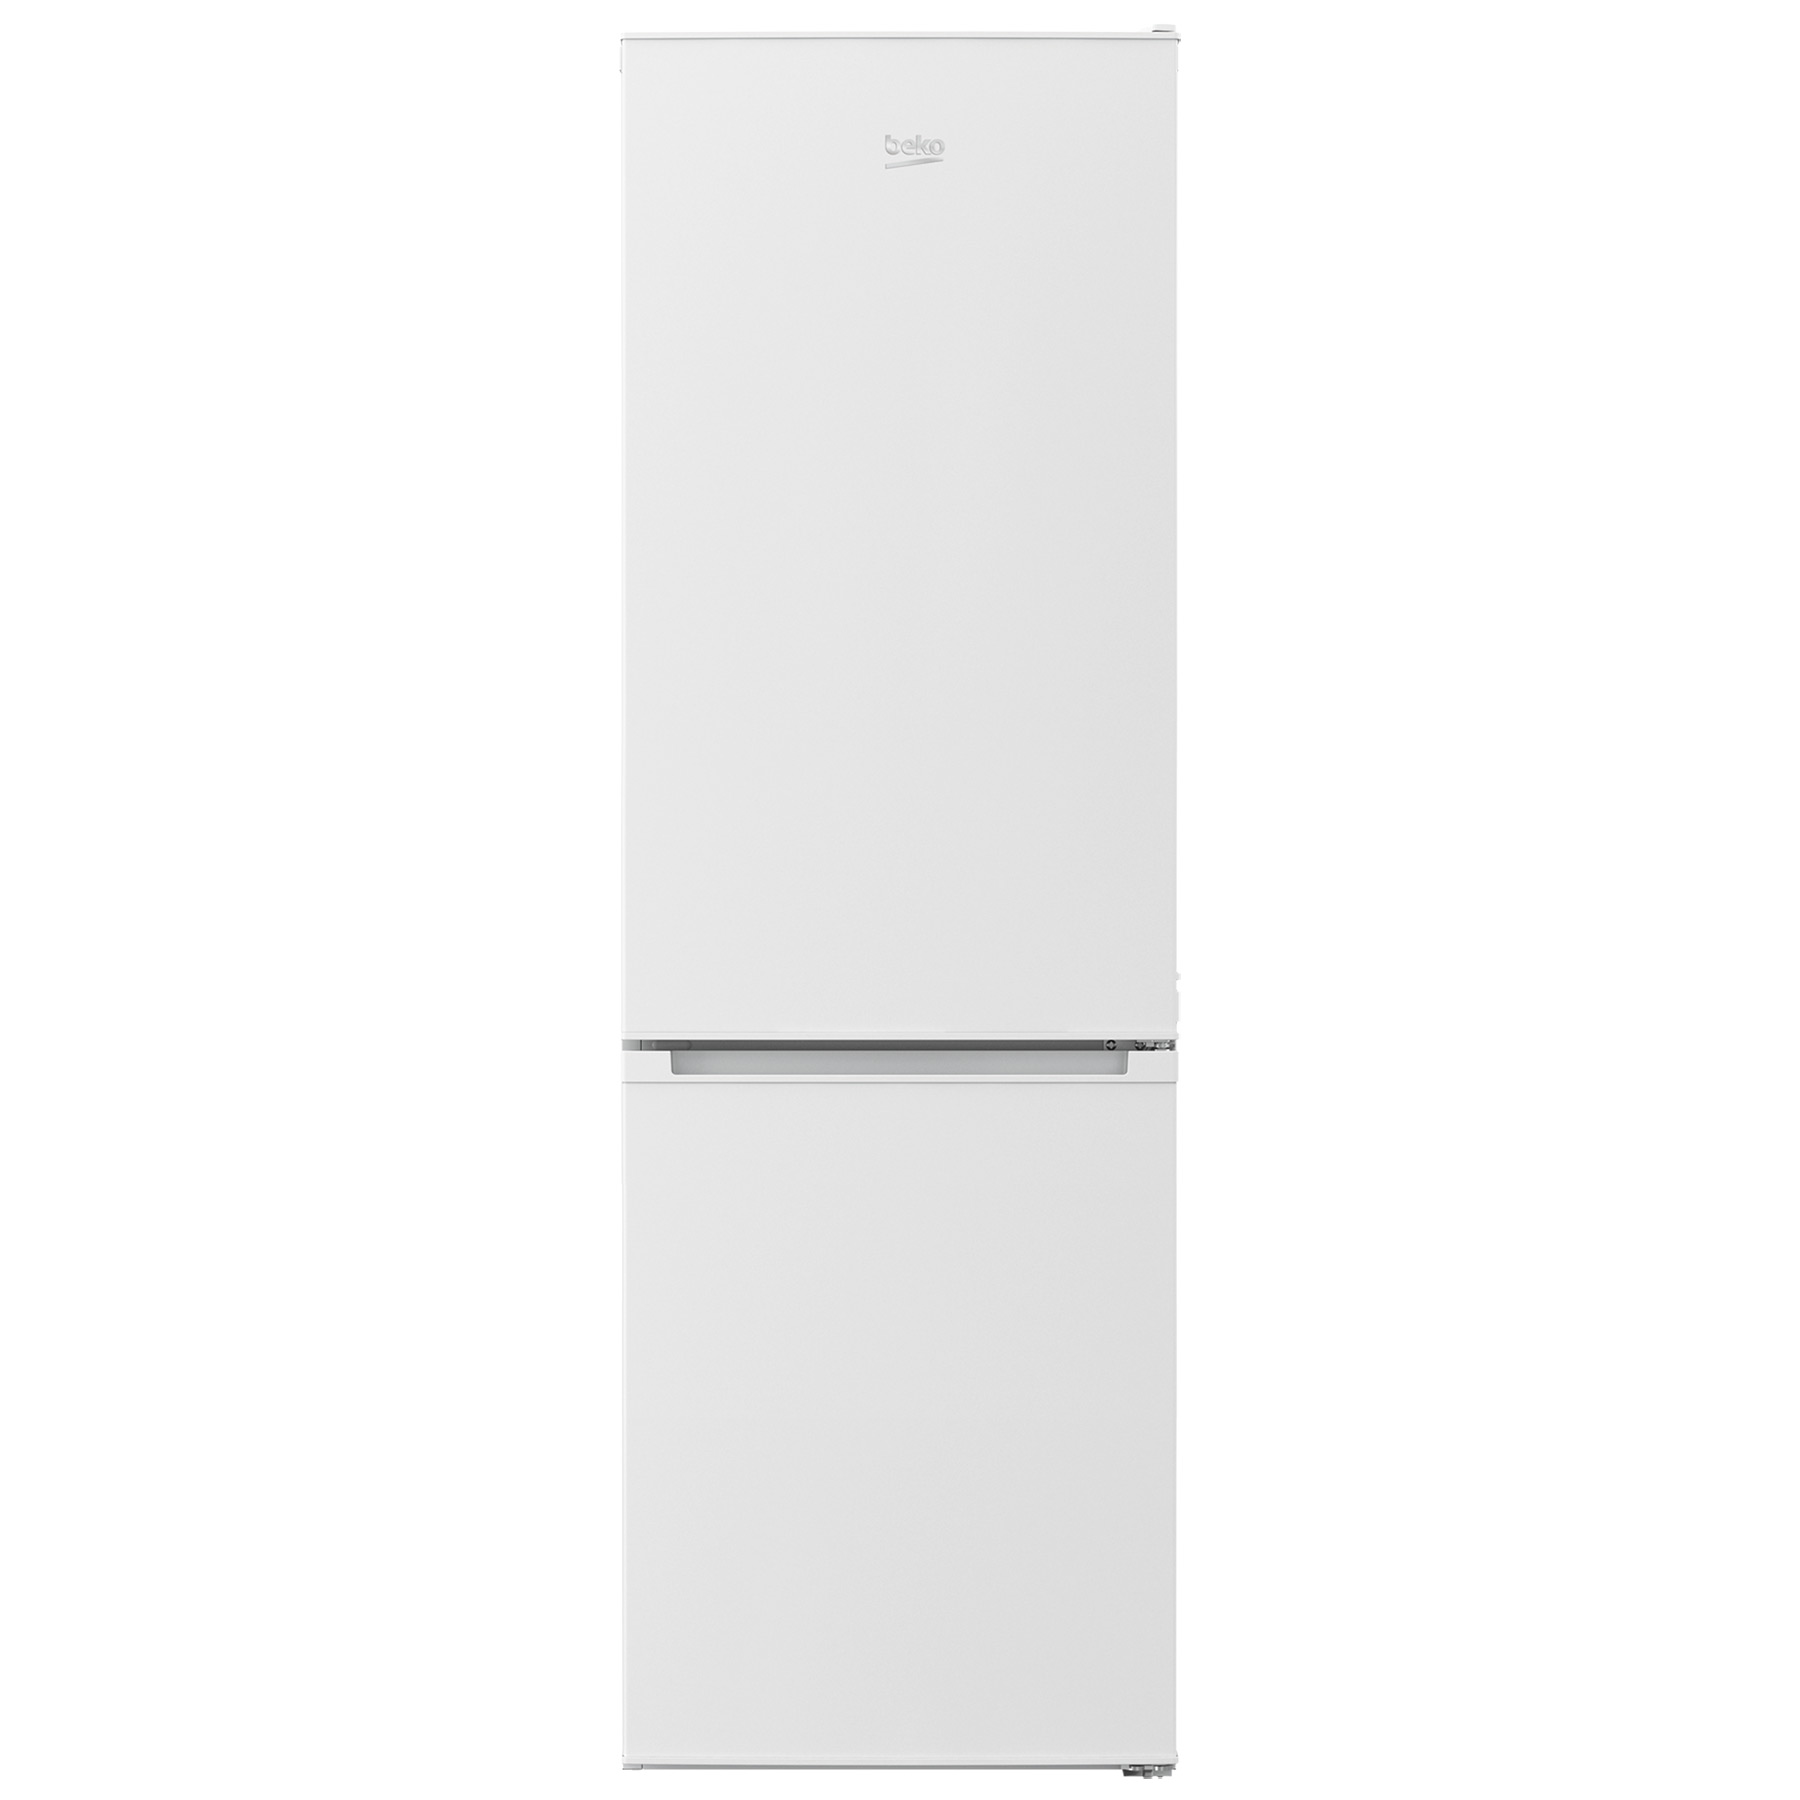 Image of Beko CCFM3571W 54cm Frost Free Fridge Freezer in White 1 7m F Rated